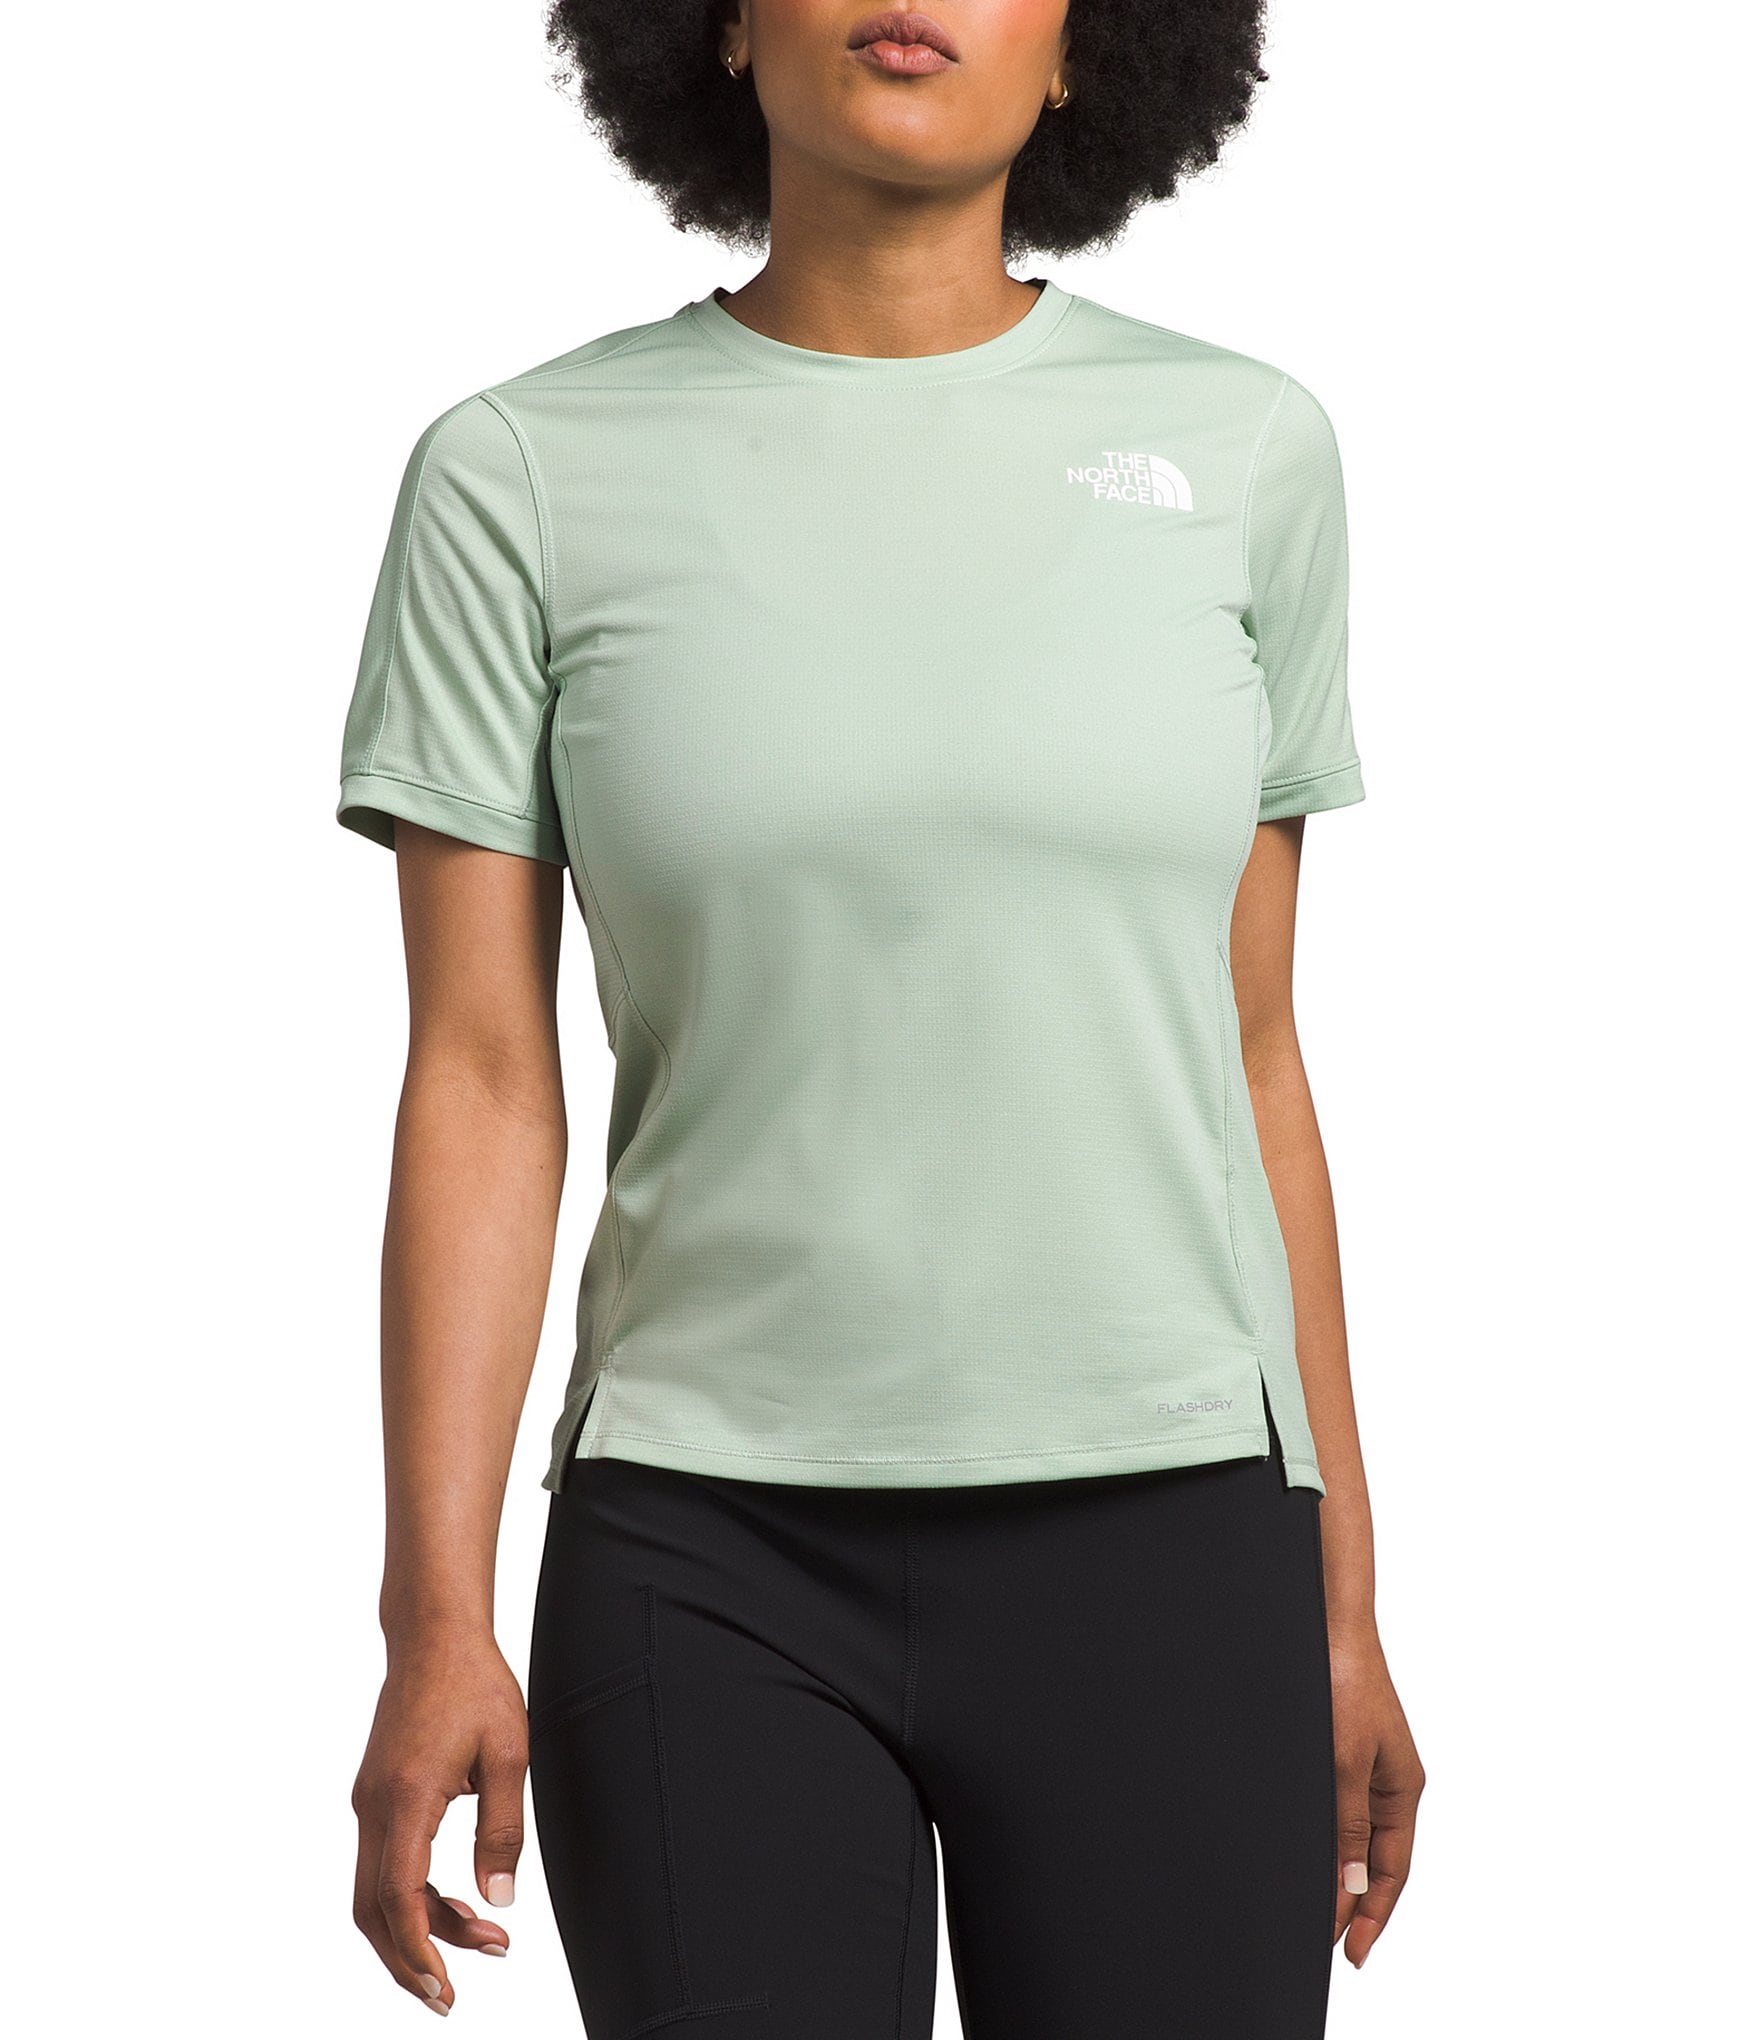 Item 919274 - The North Face FlashDry T-Shirt - Women's T-Shir